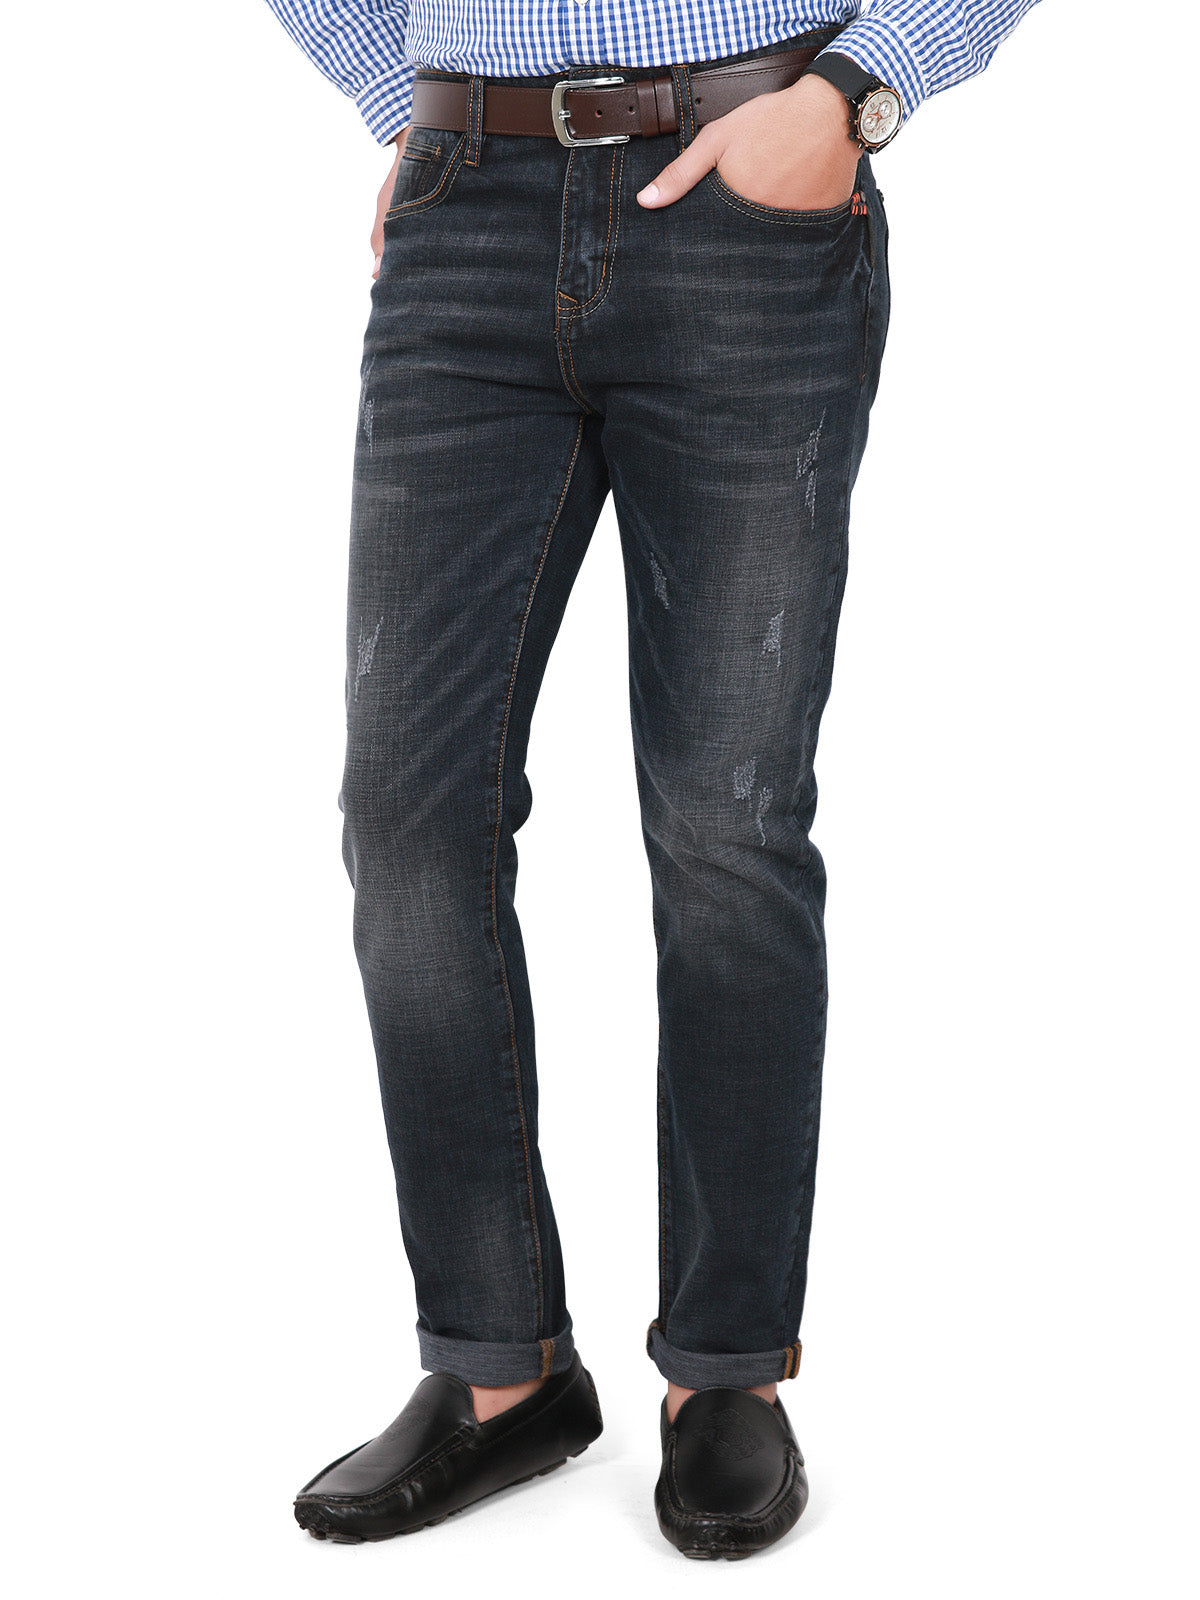 Men's Denim Jeans - F-MBP-D16-32058